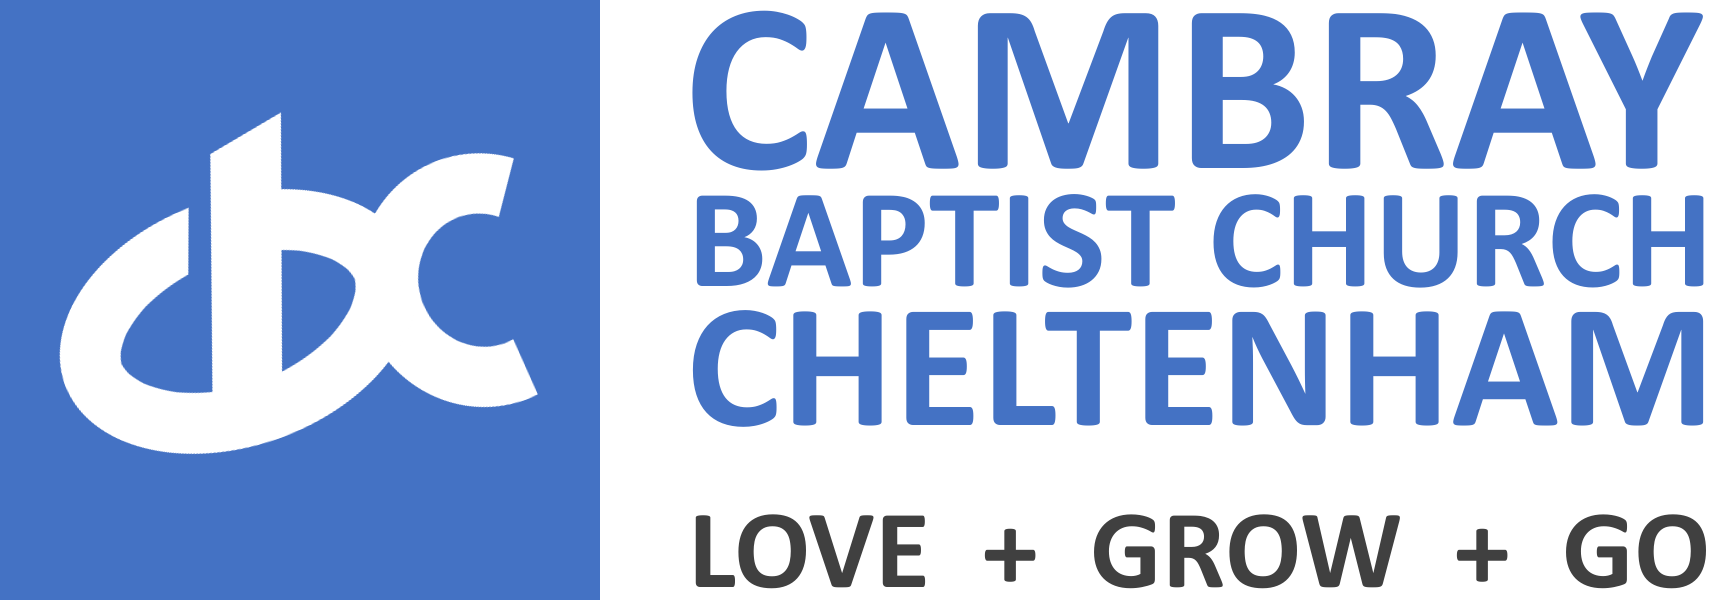 Cambray Baptist Church Logo